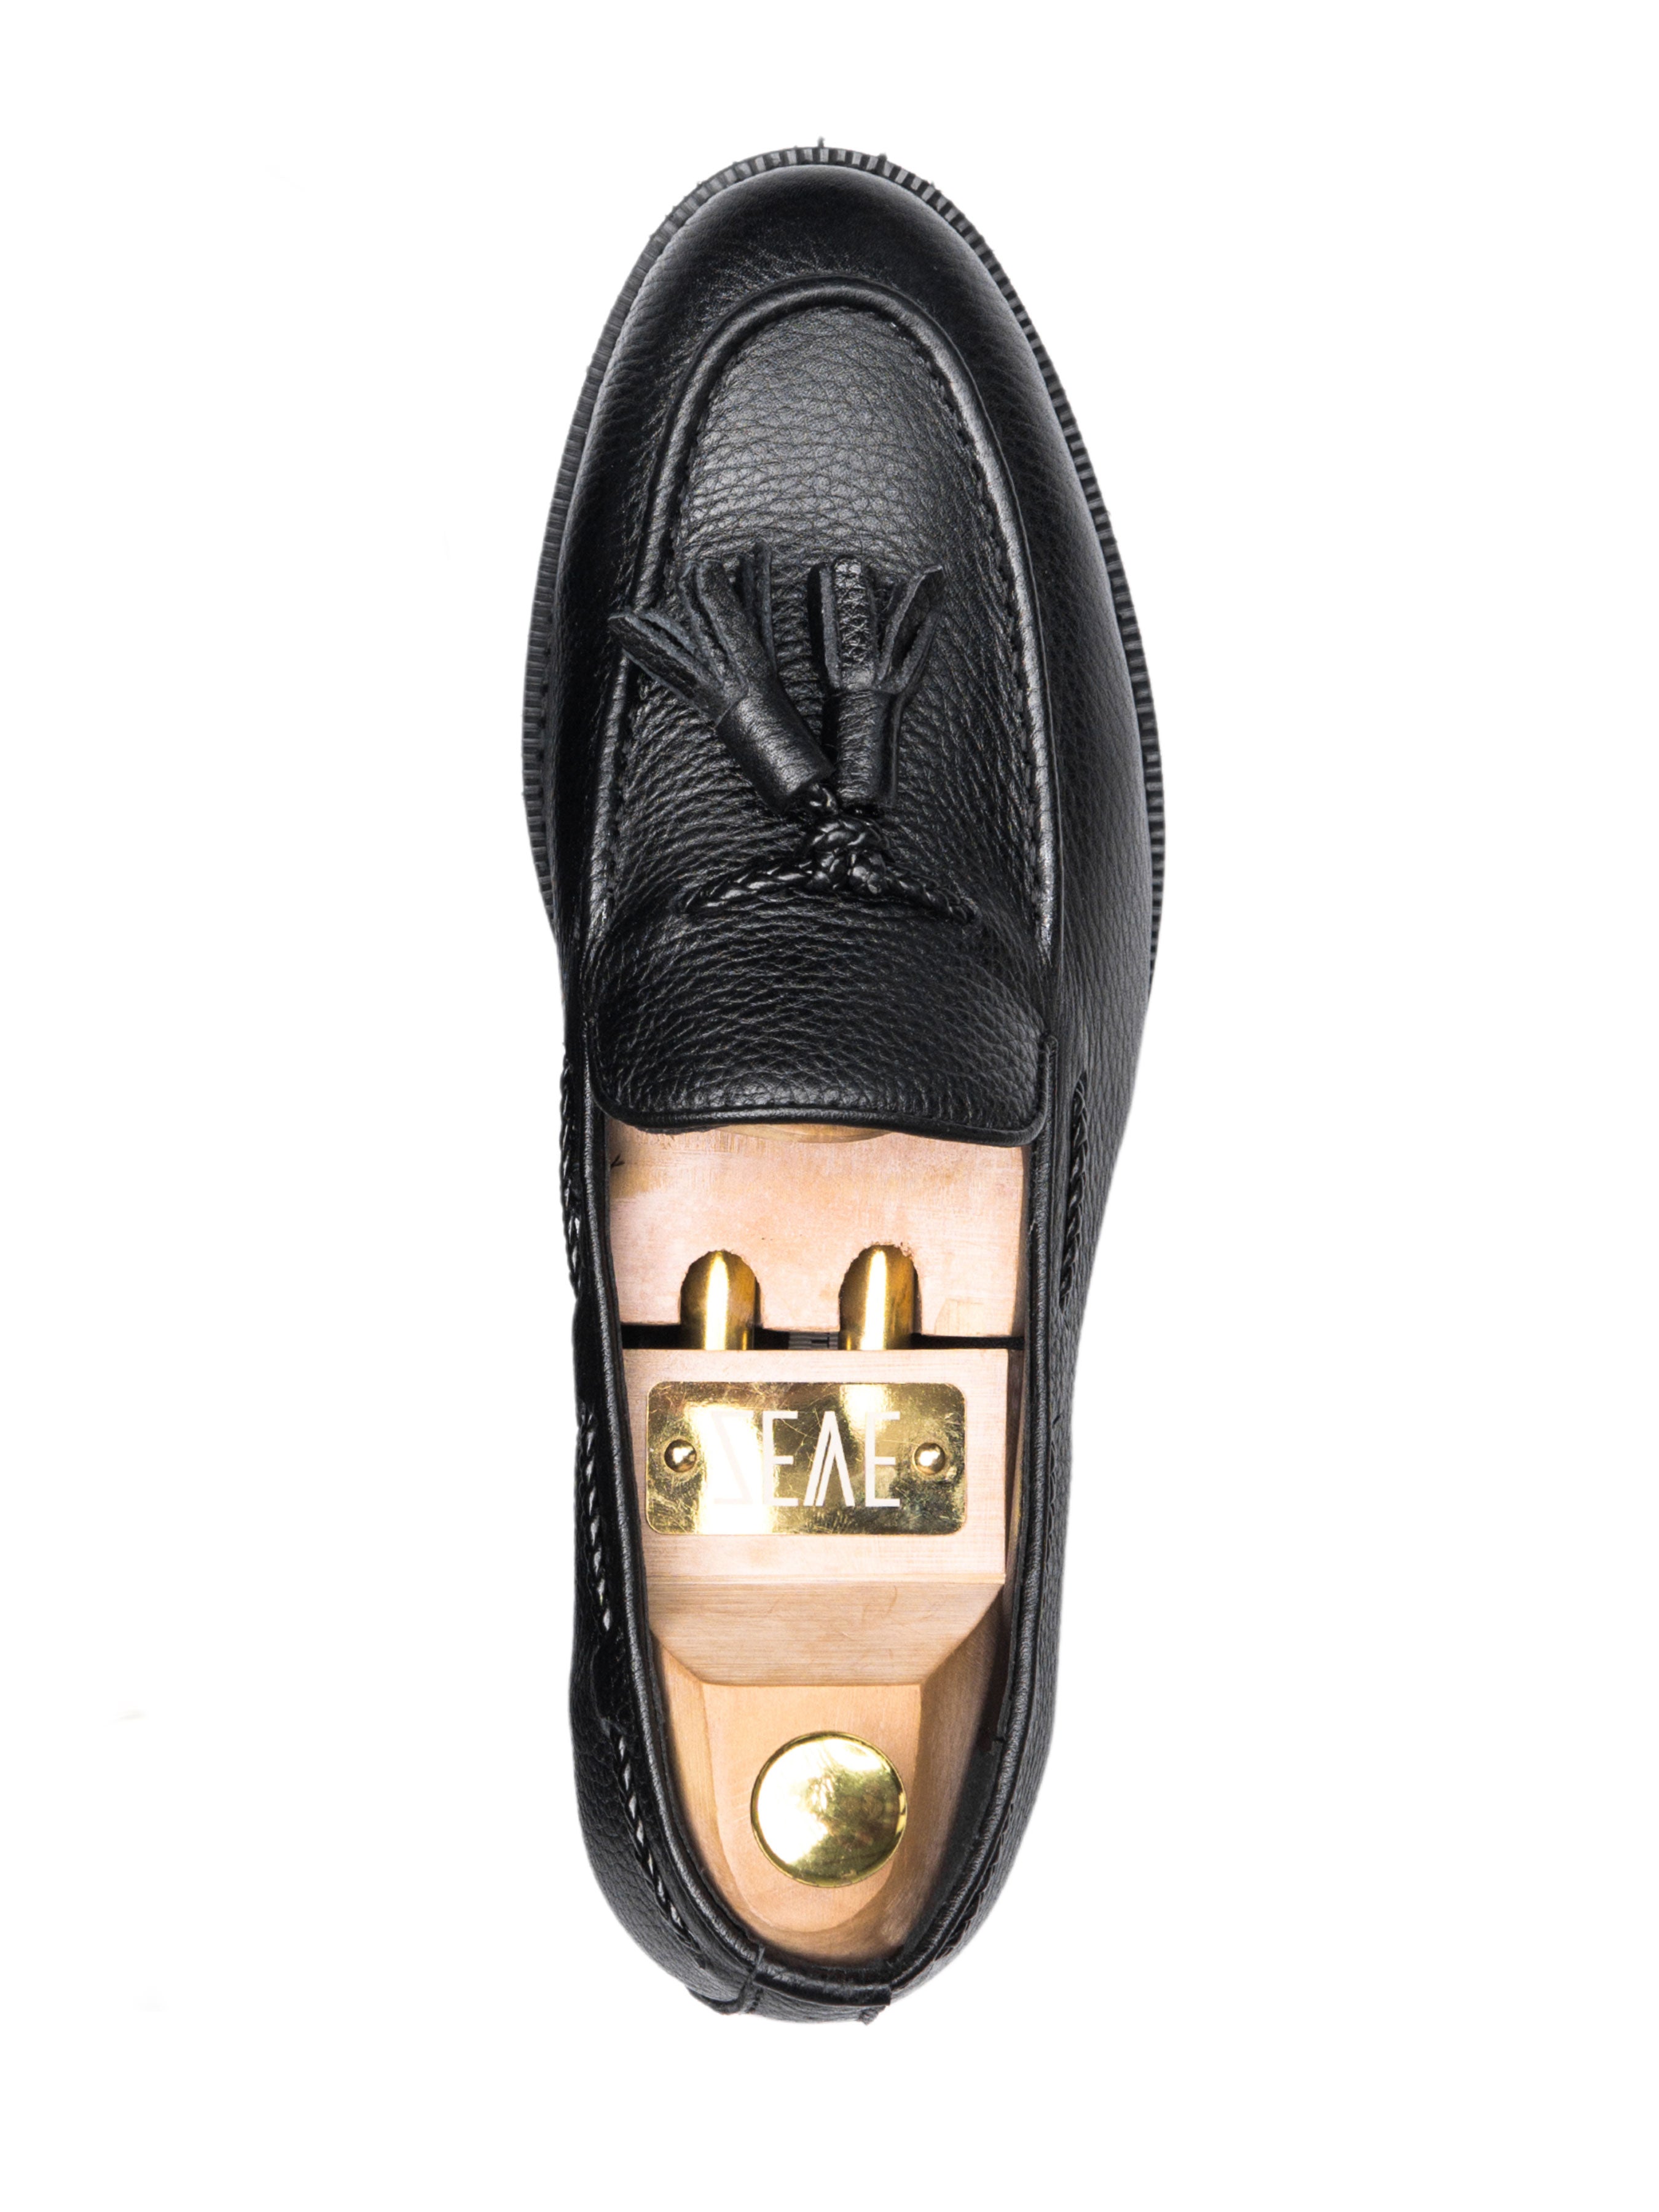 Tassel Loafer - Black Pebble Grain Leather (Crepe Sole) - Zeve Shoes